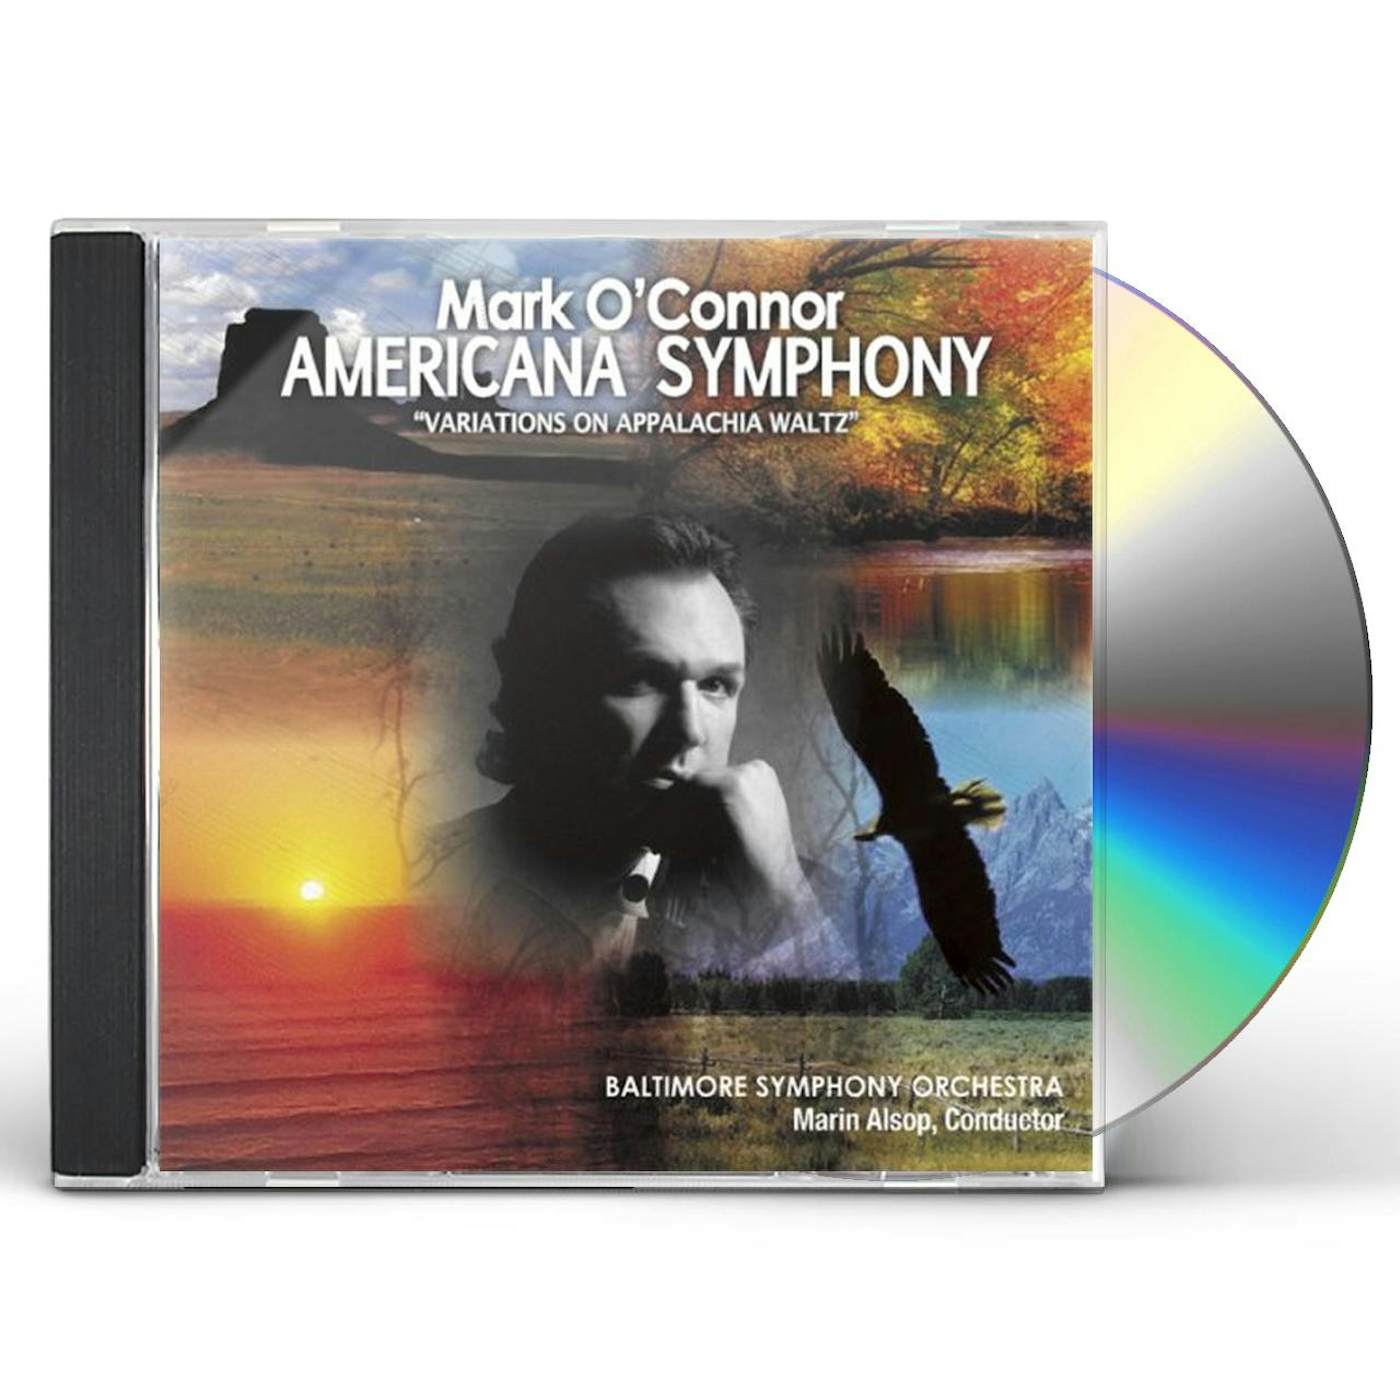 Mark O'Connor AMERICANA SYMPHONY CD